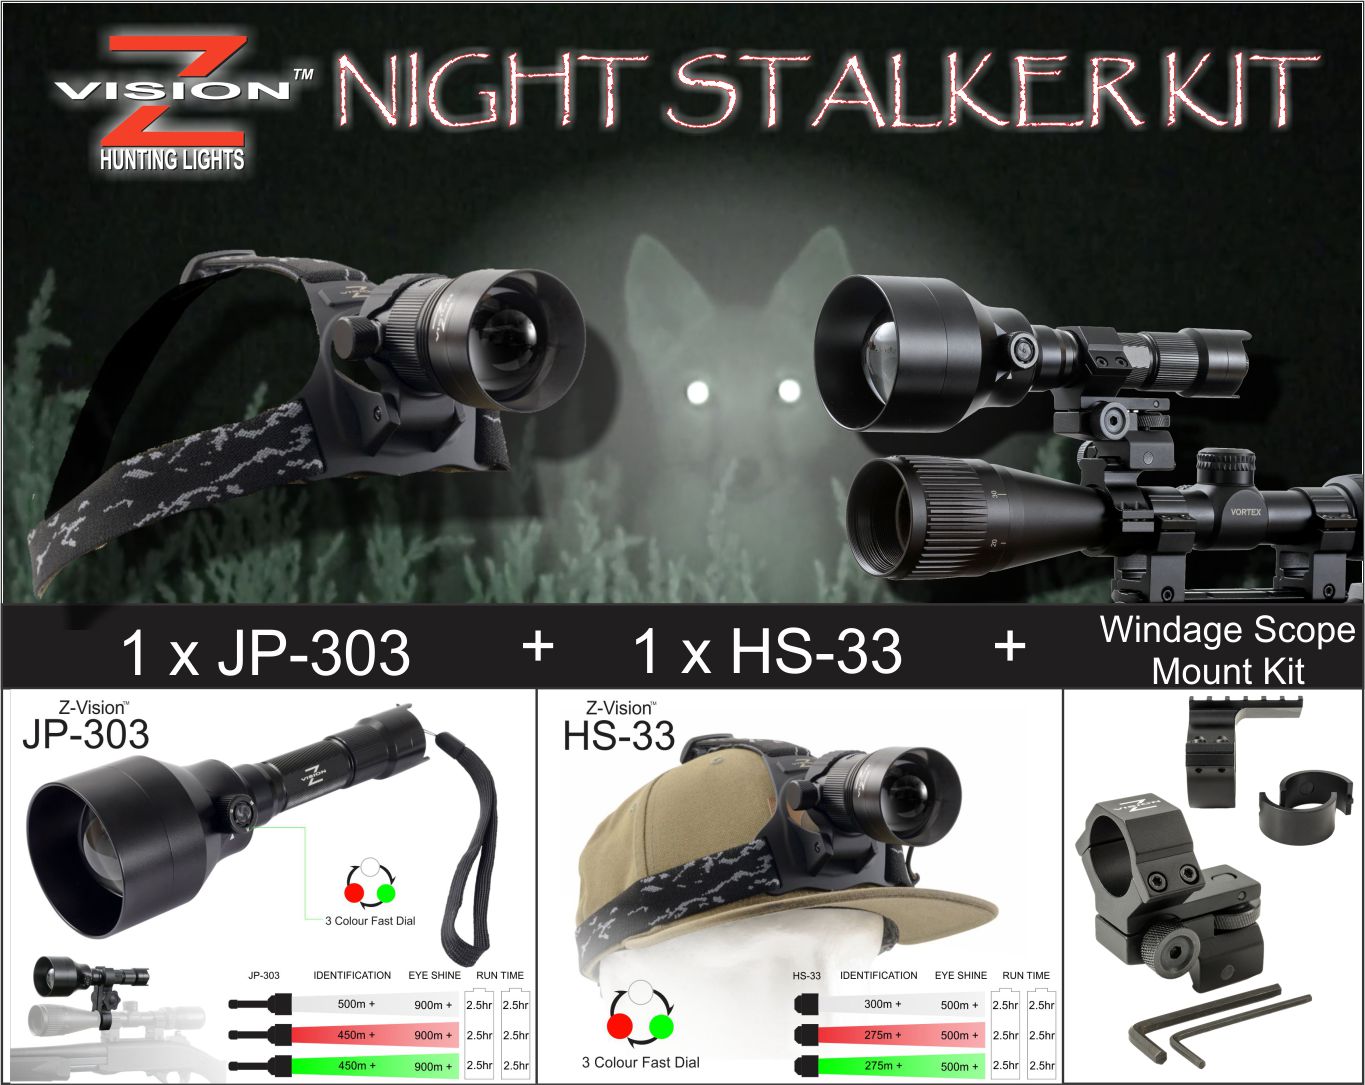 Z-Vision Night Stalker Kit